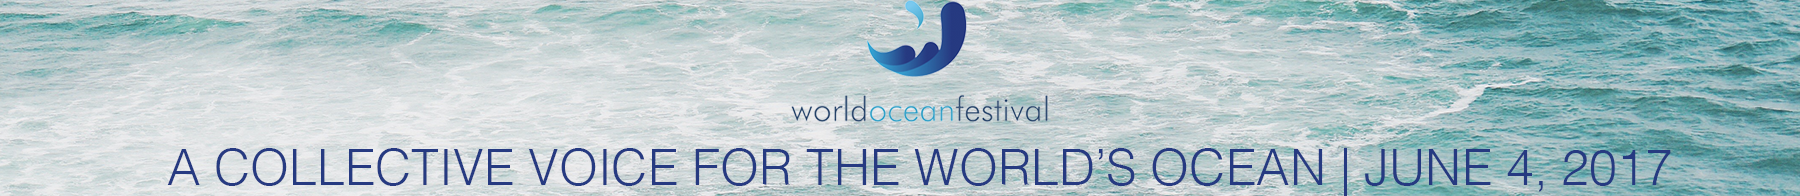 World Ocean Festival Outreach Campaign